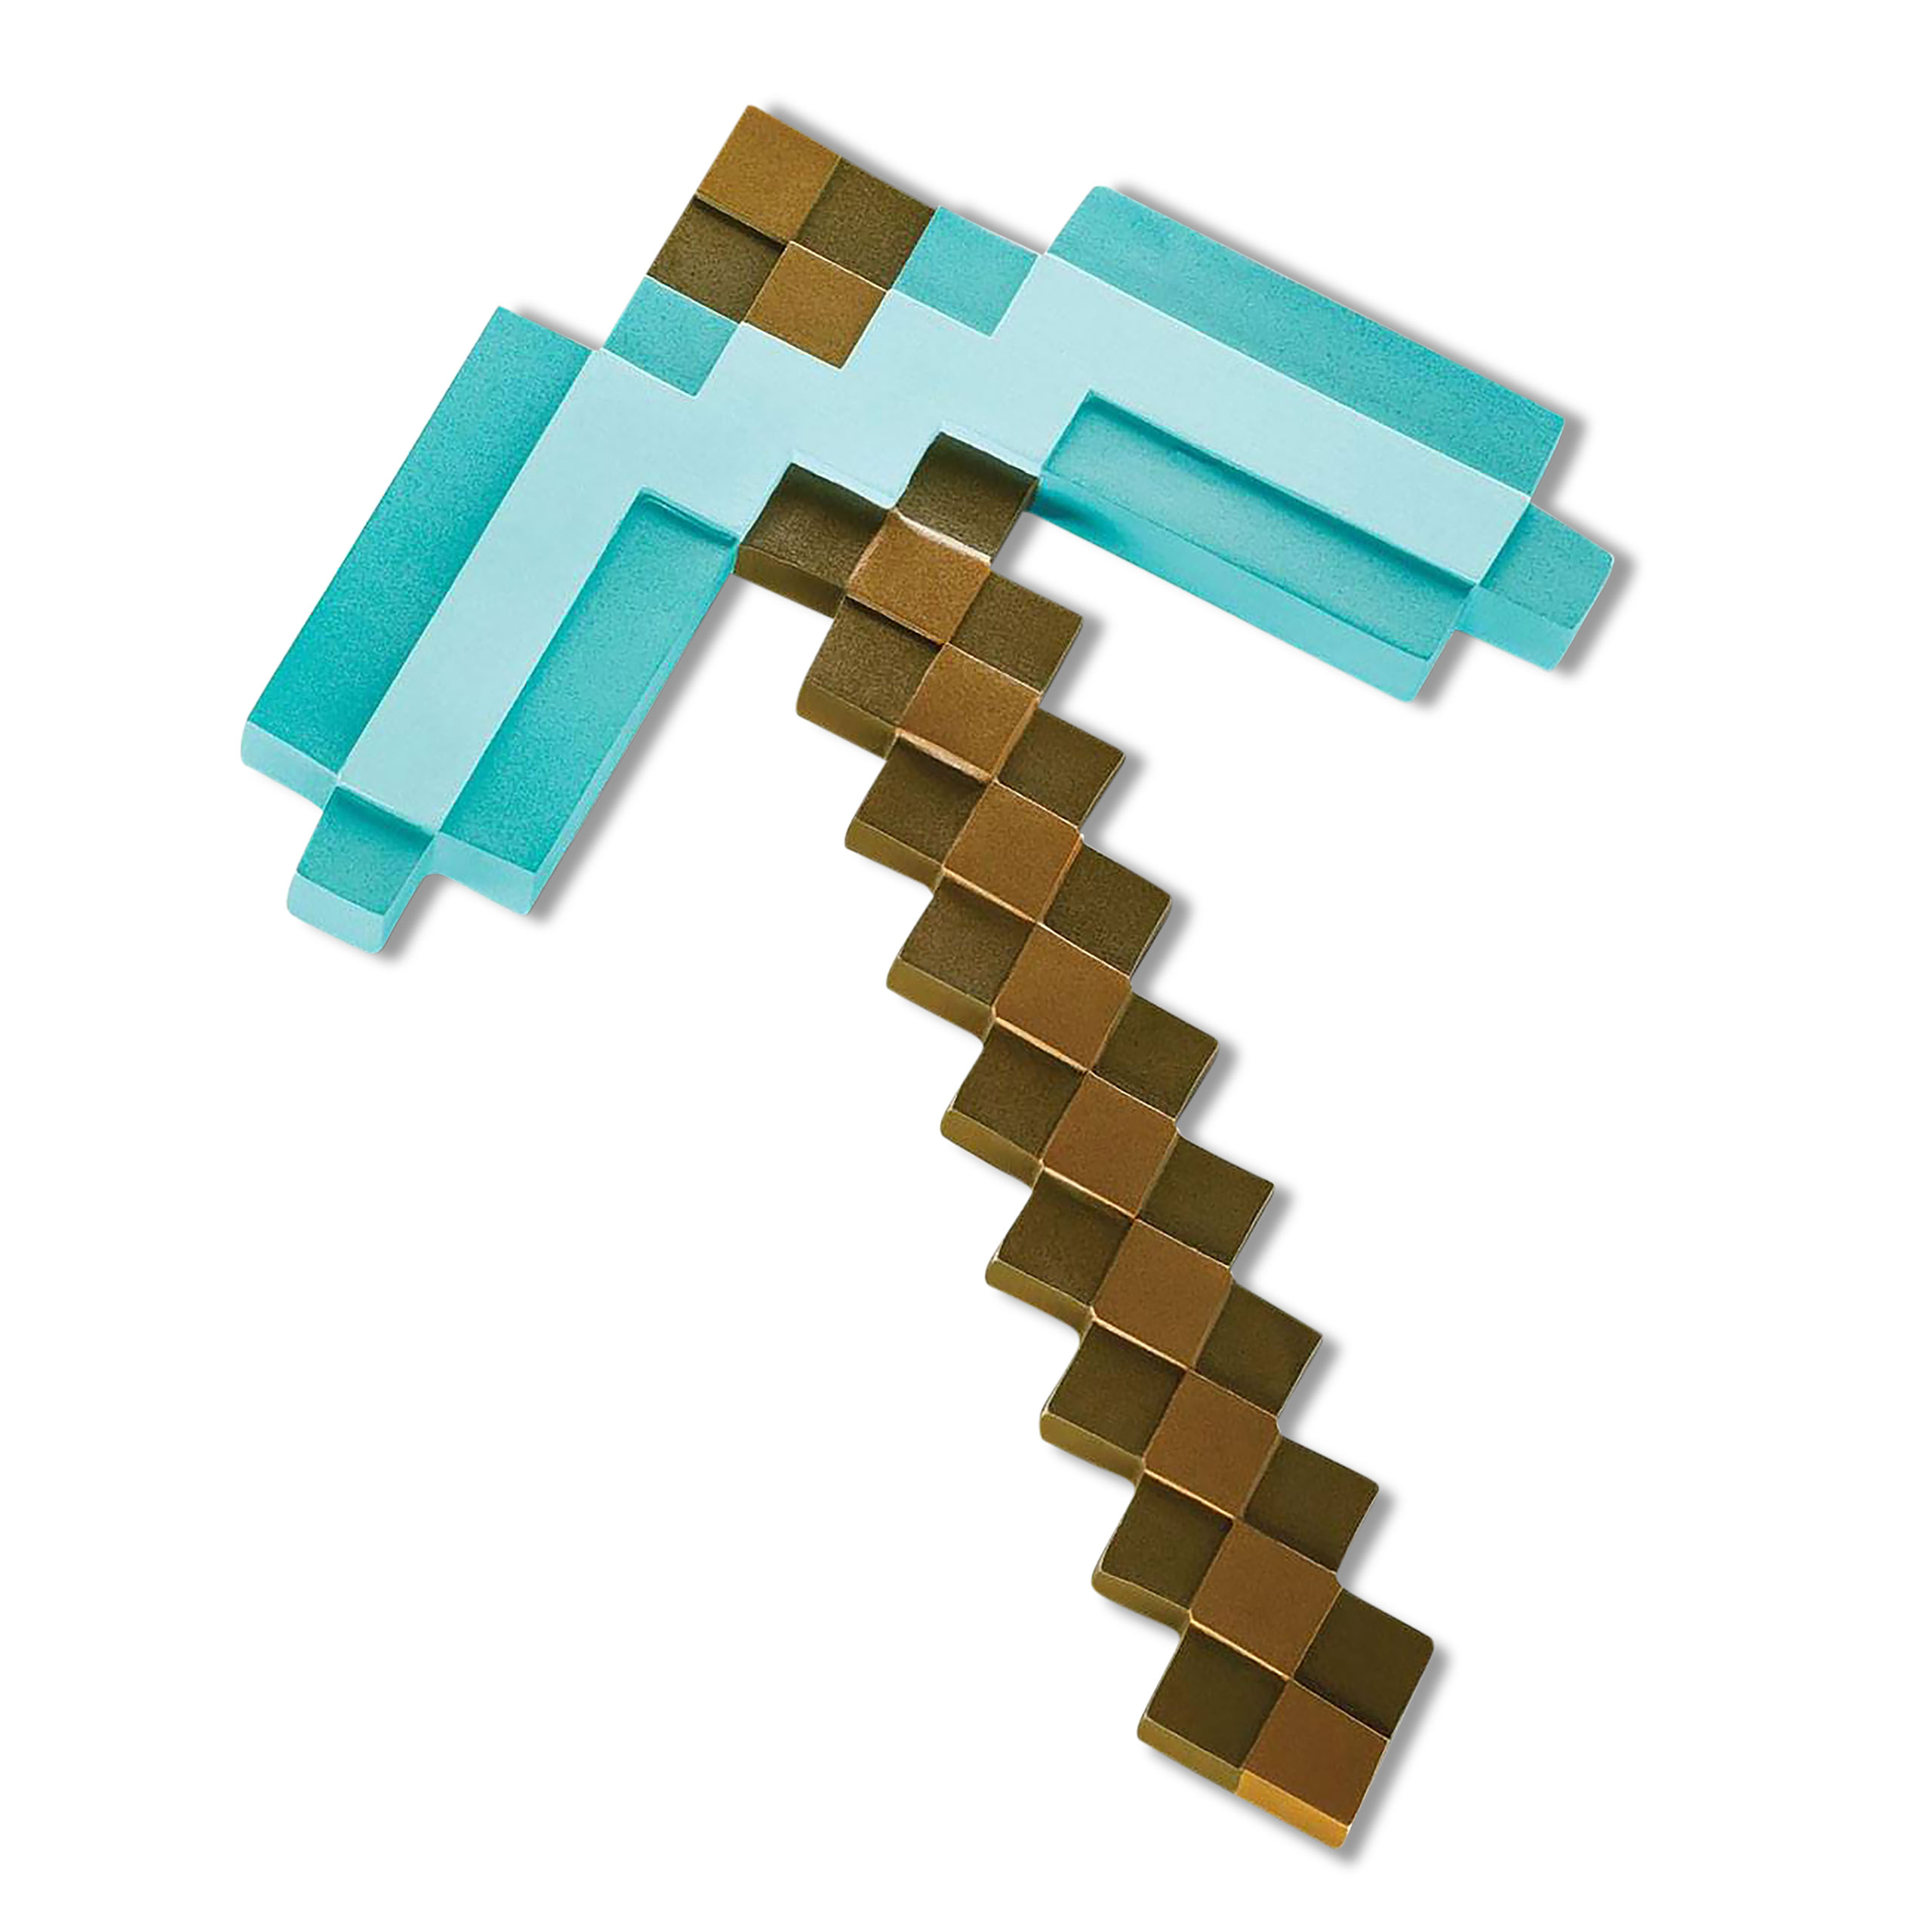 Minecraft - Diamant Spitzhacke Replik